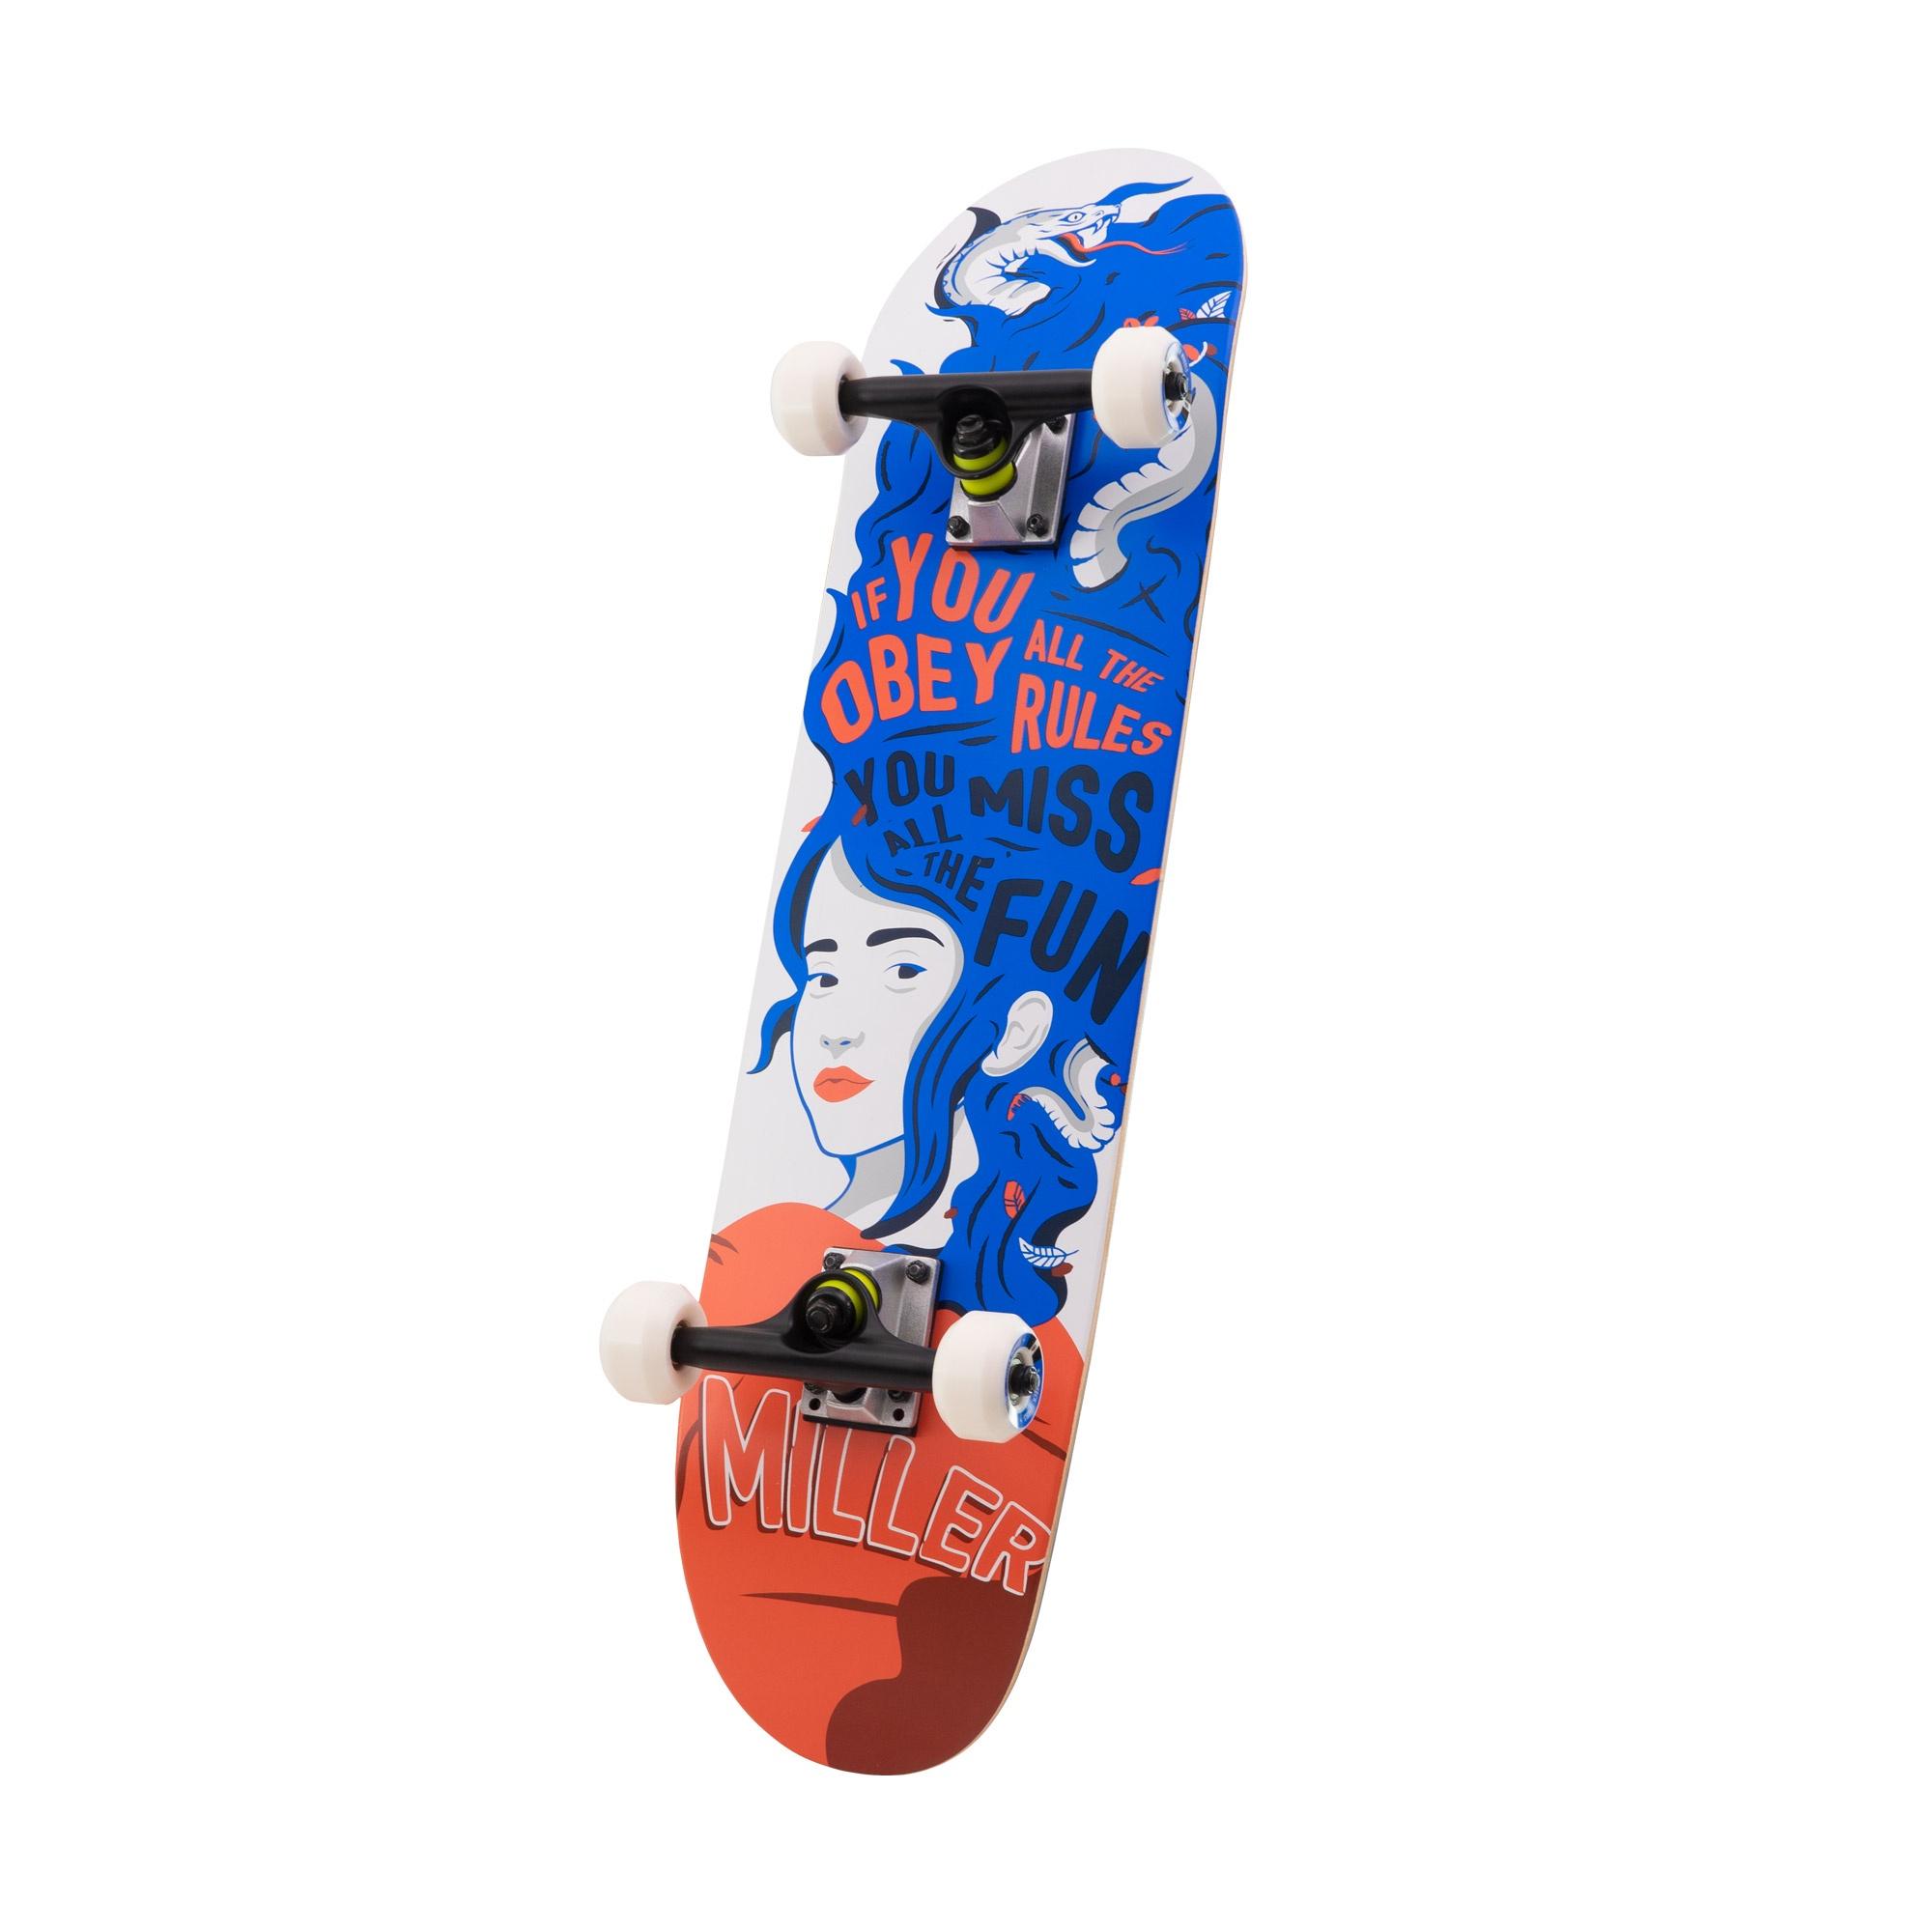 Skateboard Completo Miller Fun Bordo 31,5"x8" Abec7 Rodas Creek Shr 53mm